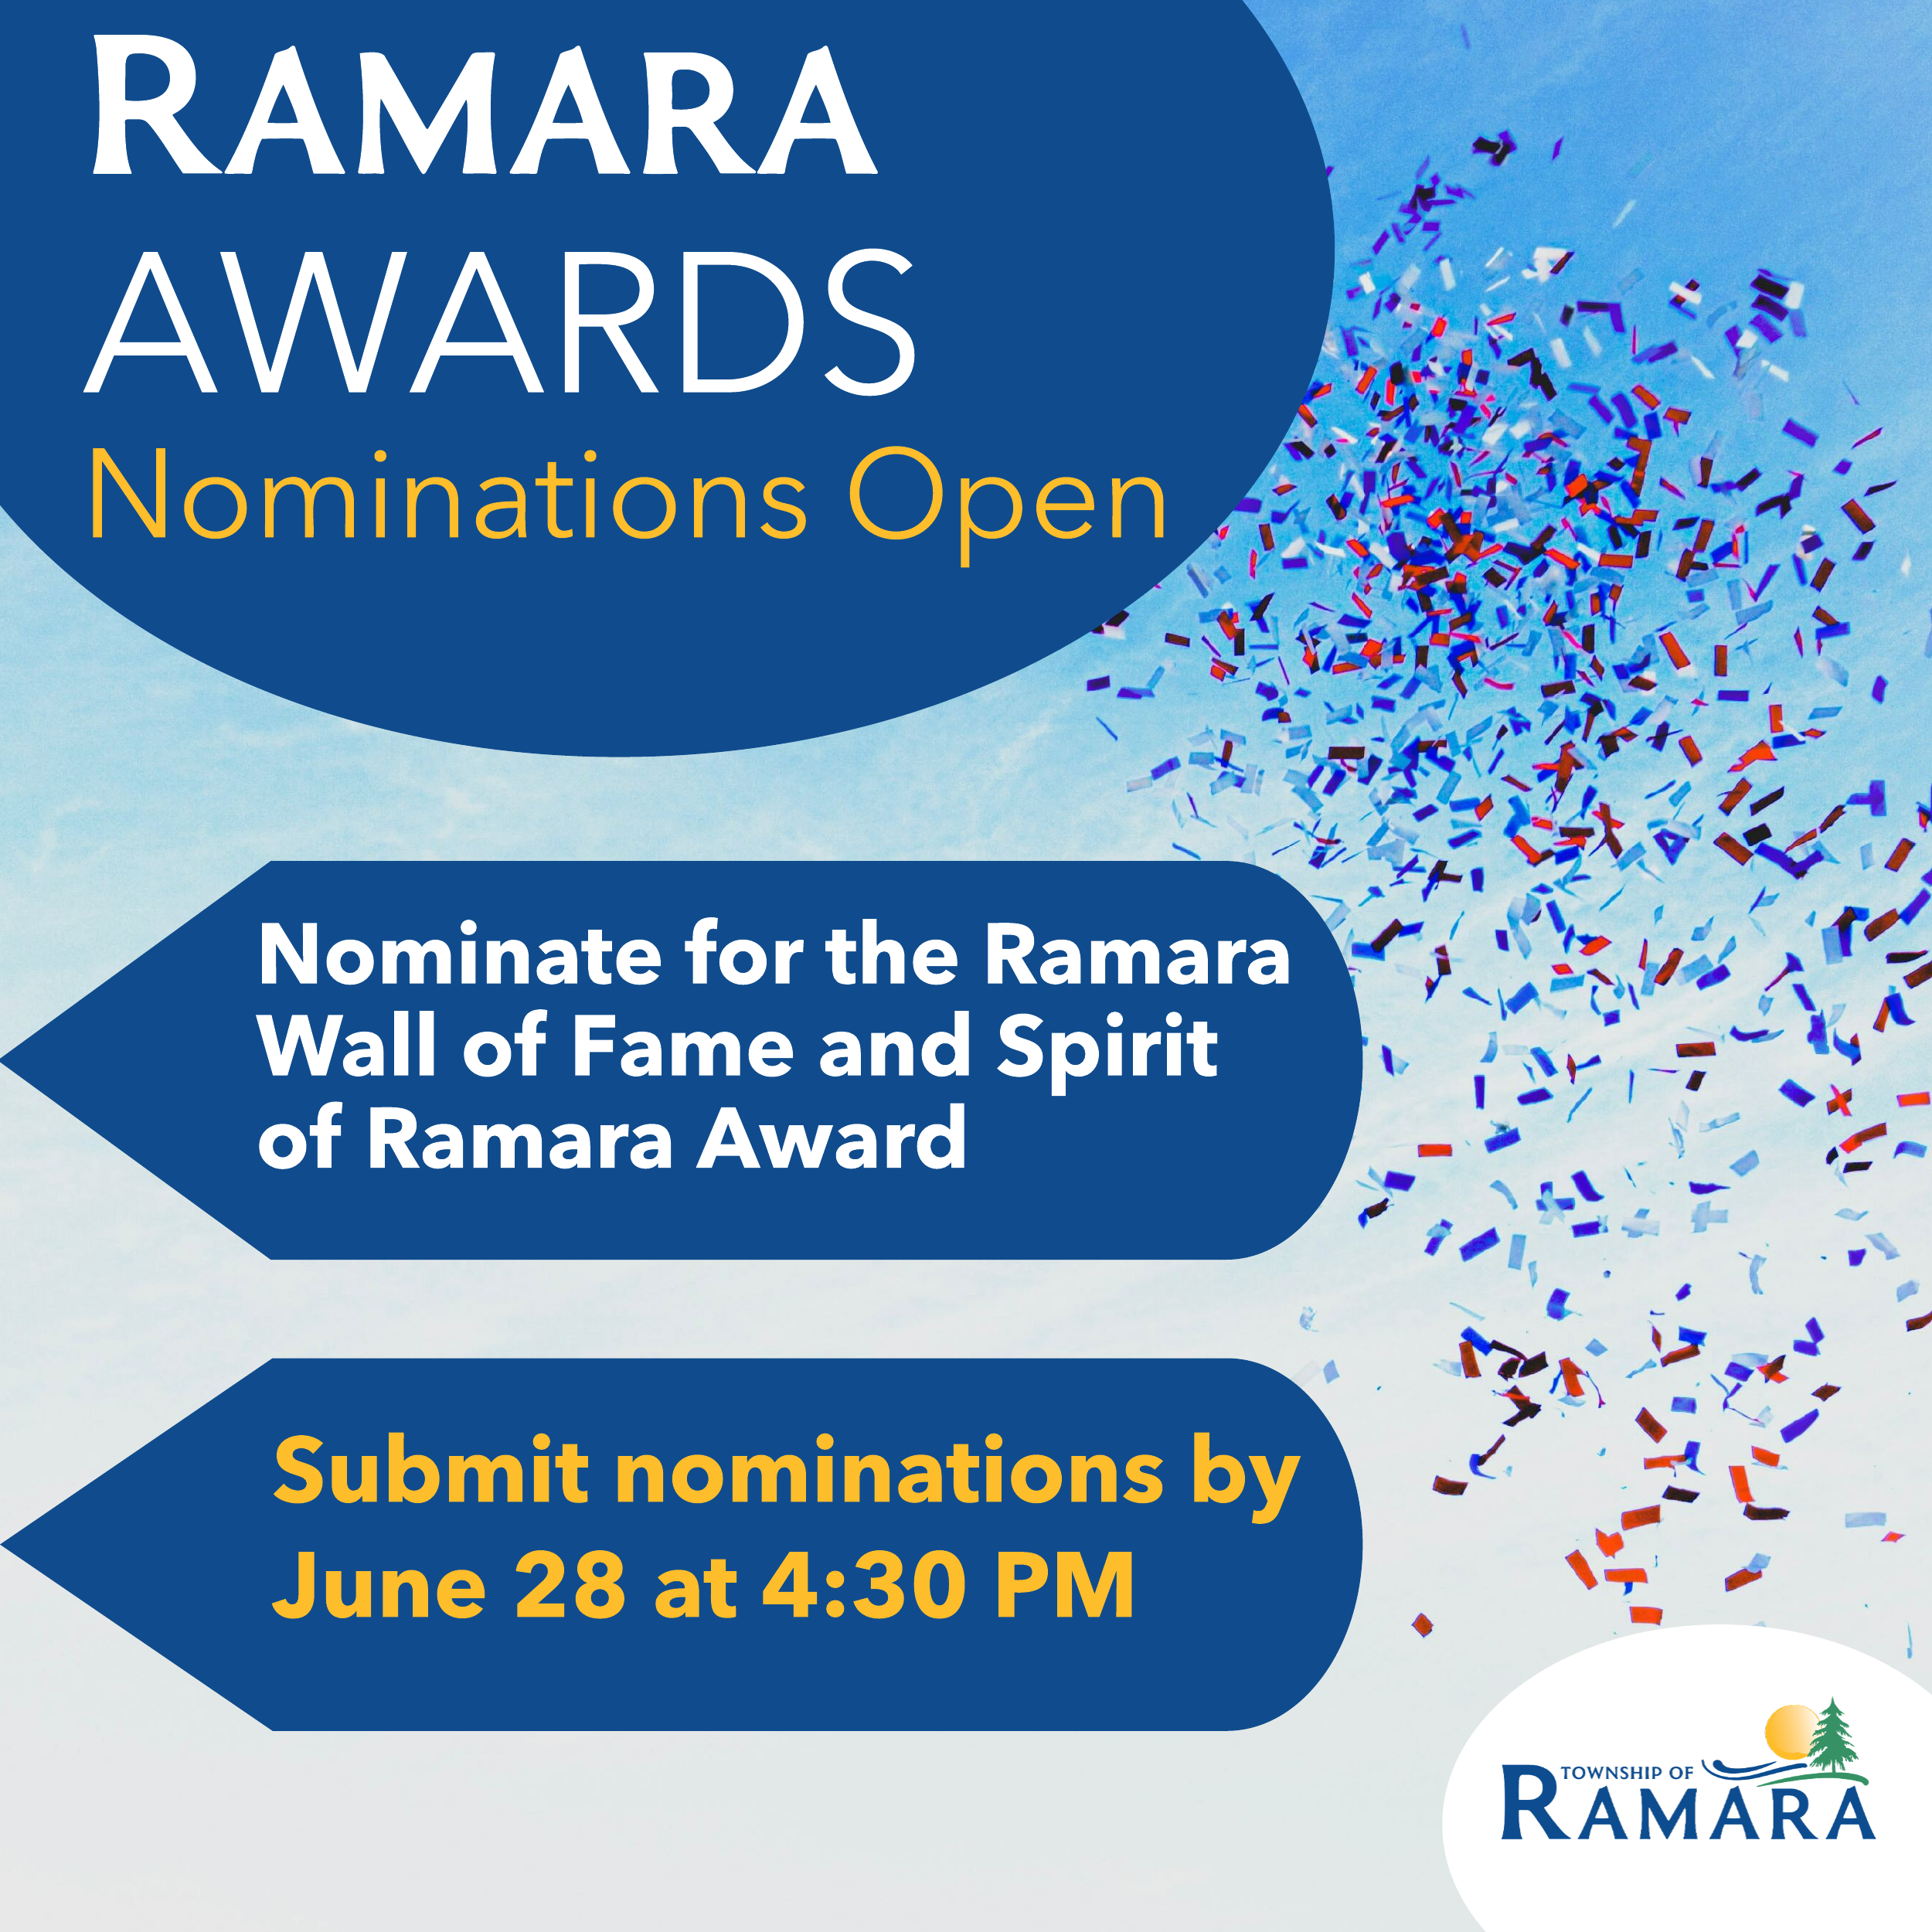 Nominations opened for Ramara Awards